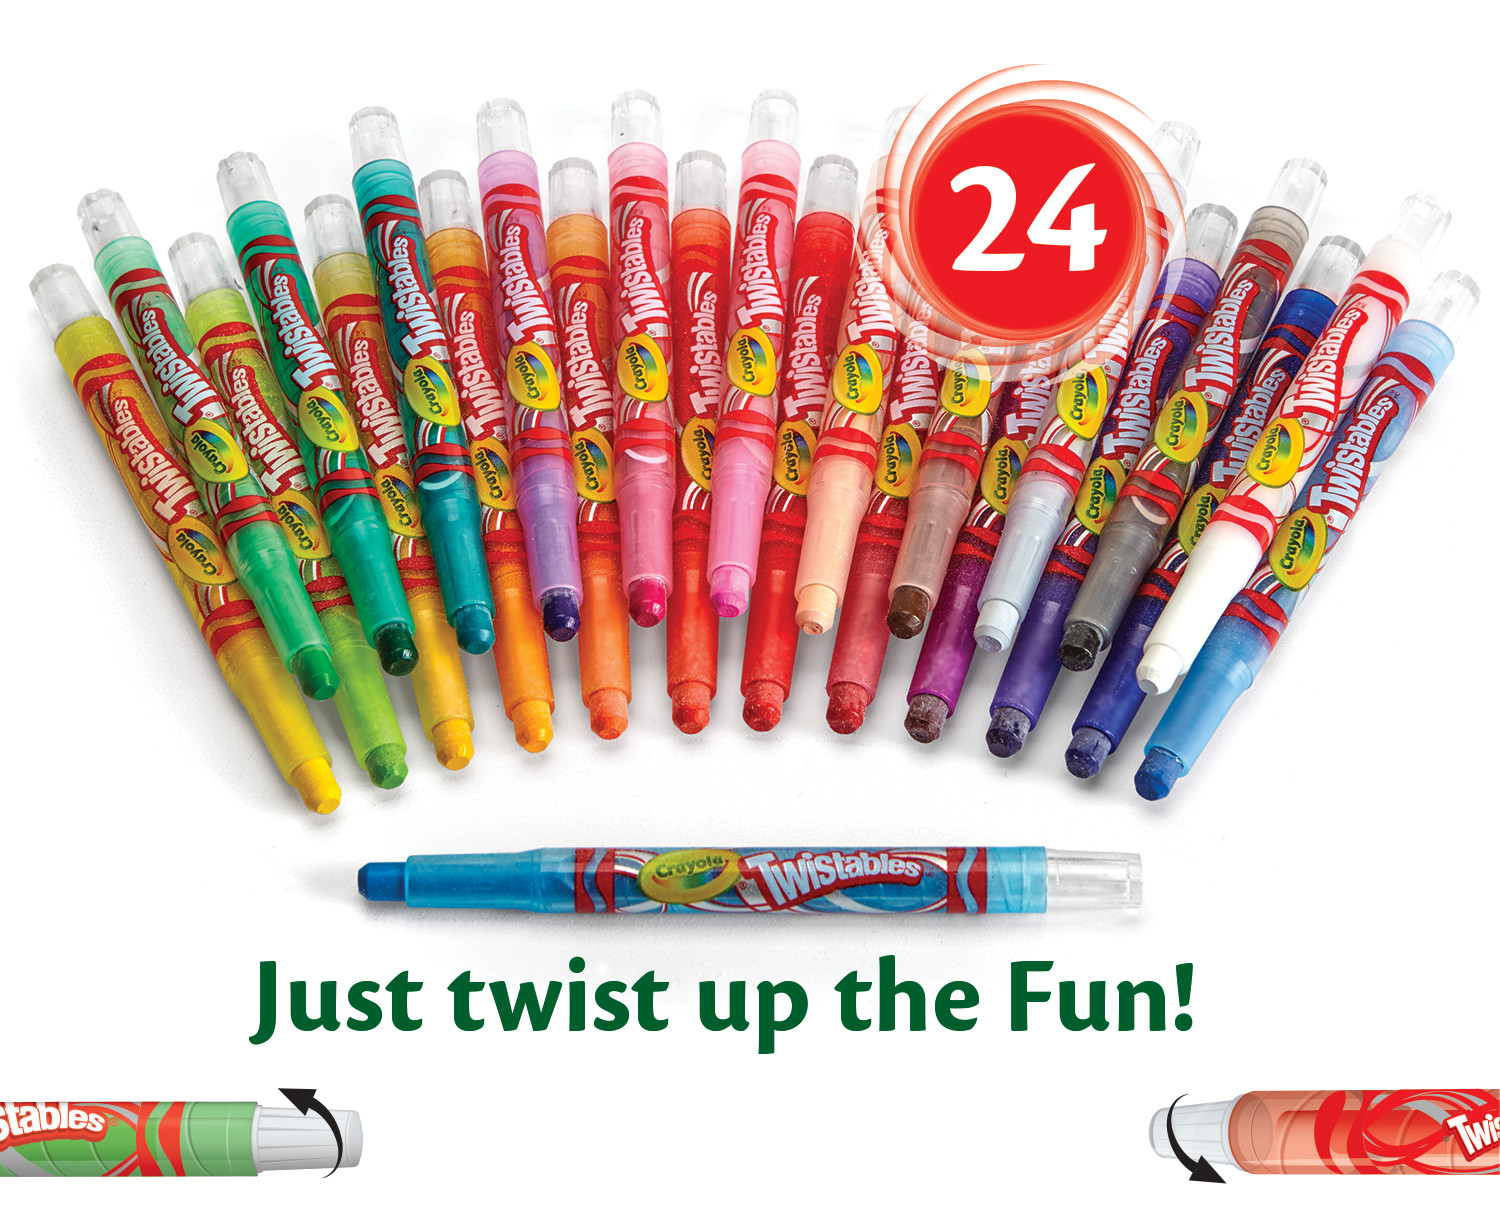 24 Twistables Mini Crayons Fun Effects | crayola.co.uk